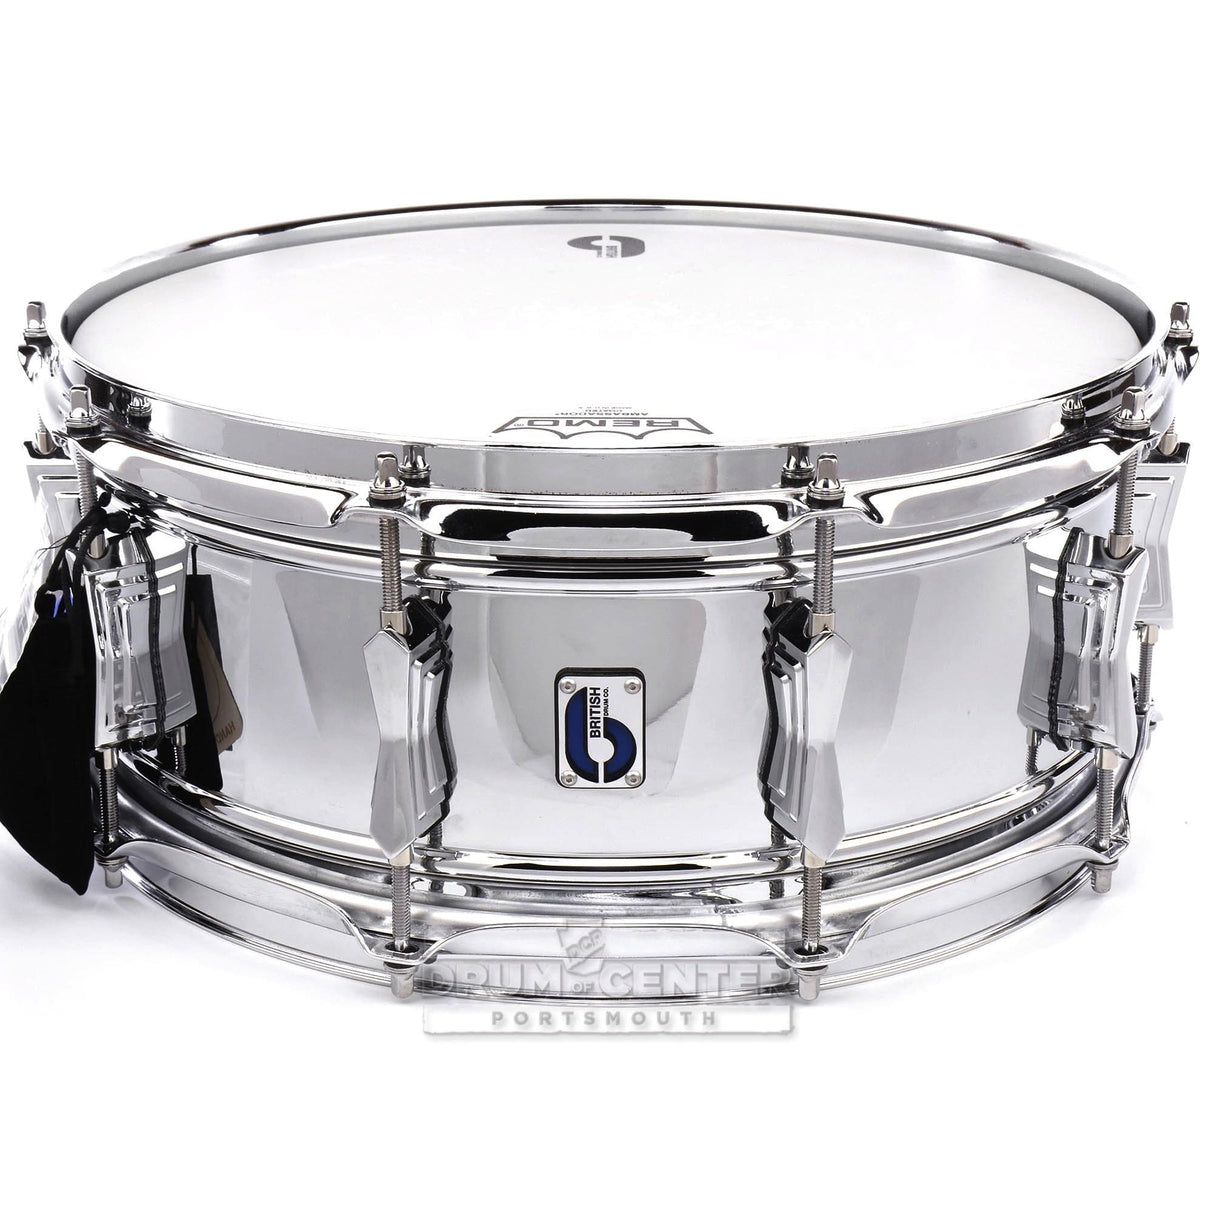 British Drum Company Bluebird Snare Drum 14x6